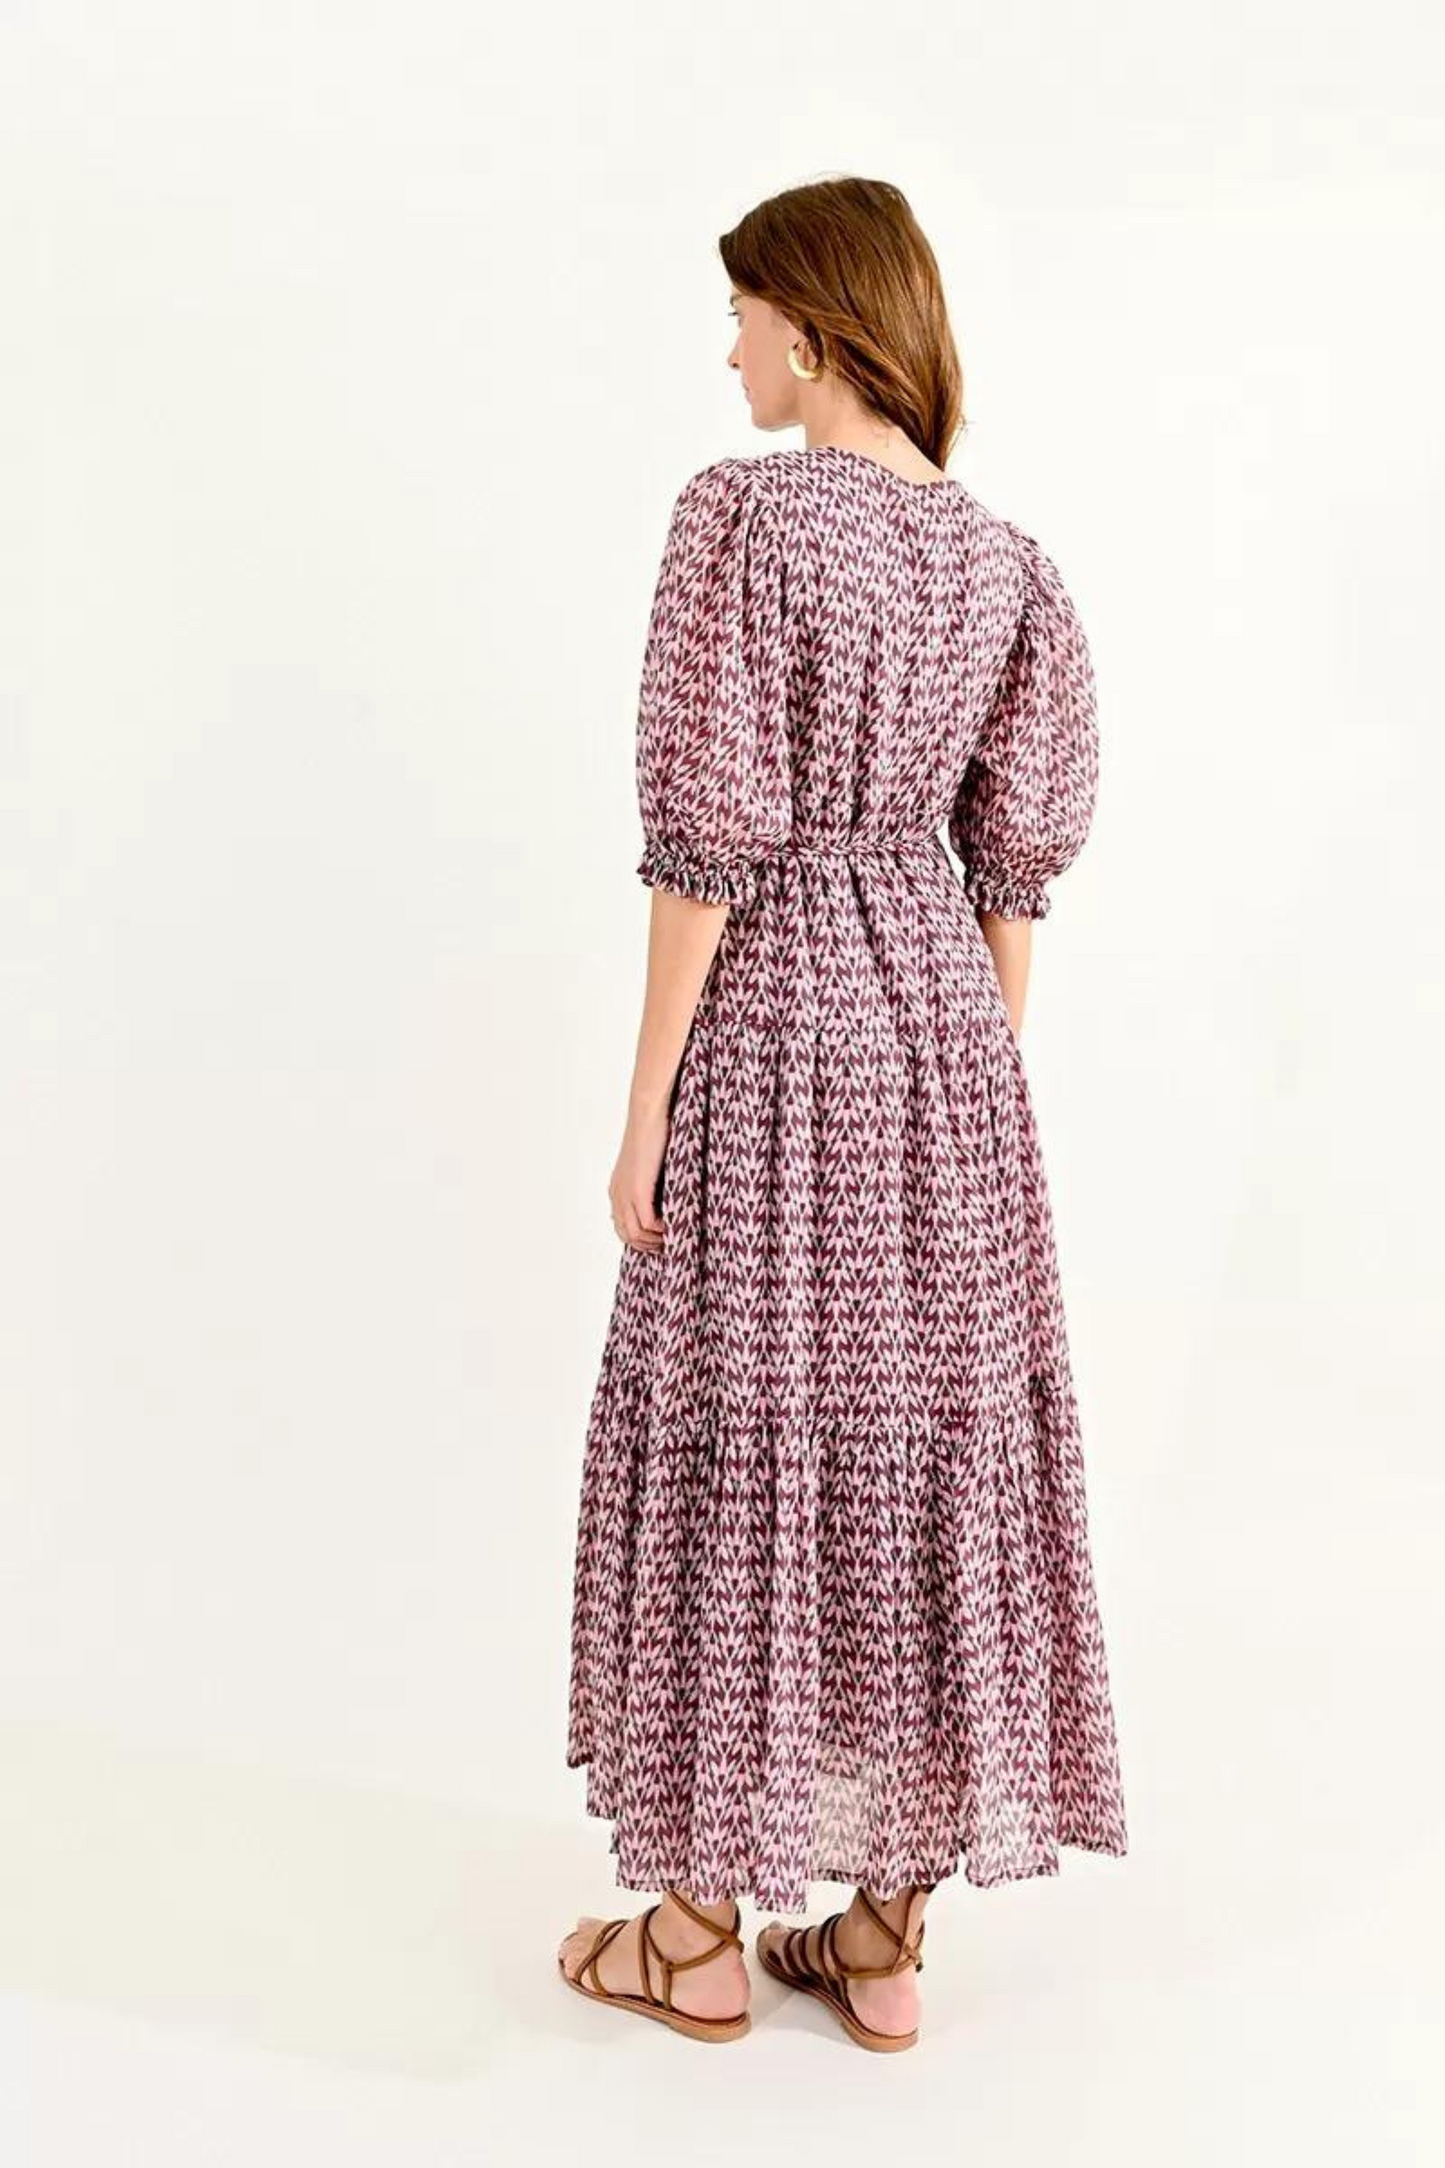 Molly Bracken - BatikPrint Cotton Dress